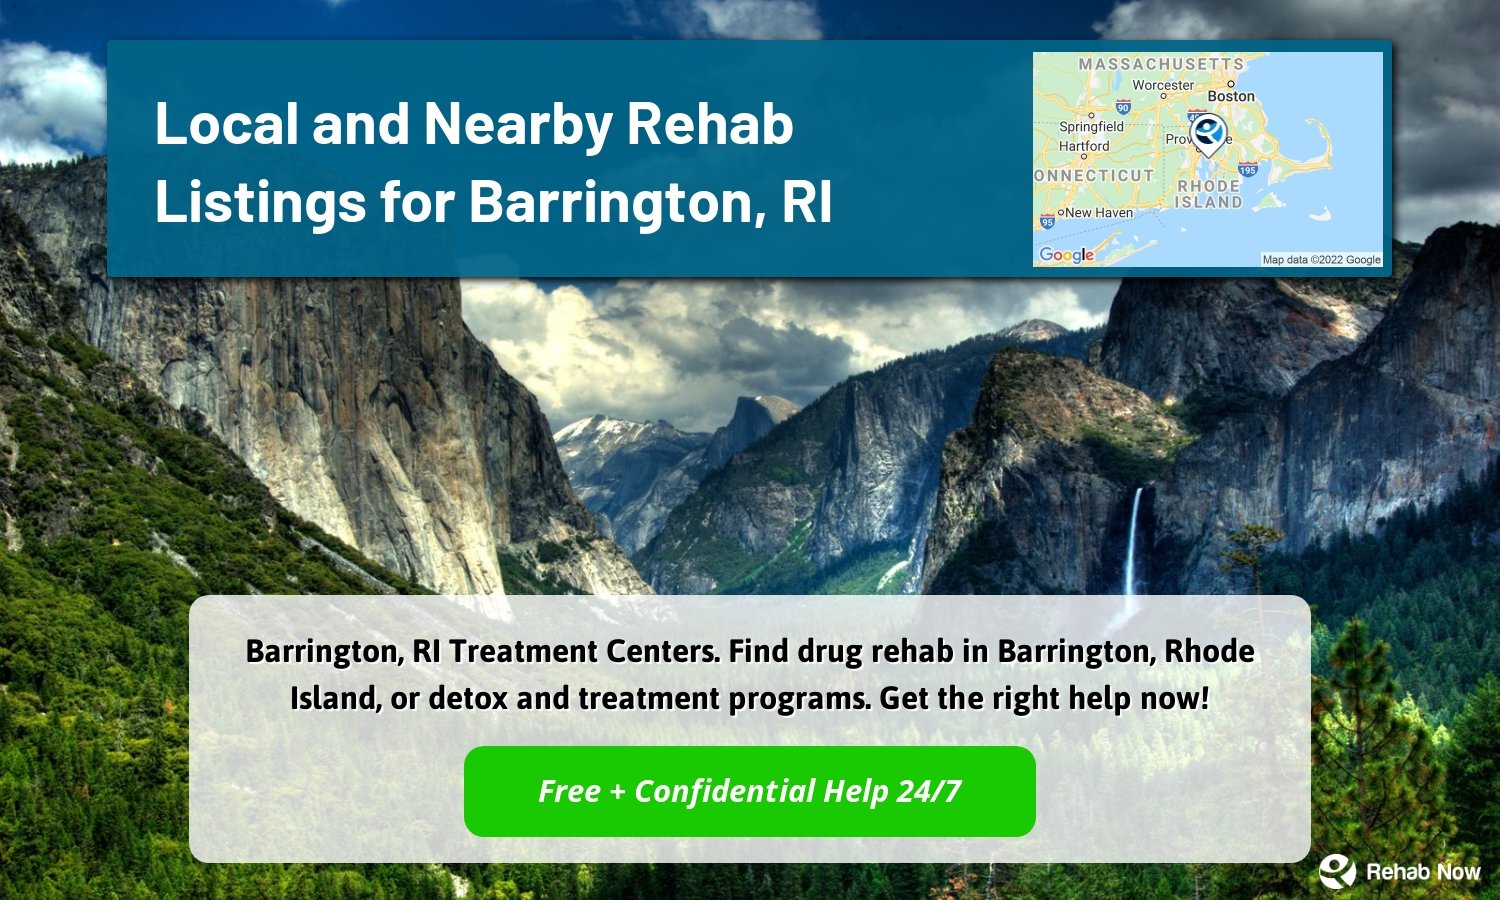 Barrington, RI Treatment Centers. Find drug rehab in Barrington, Rhode Island, or detox and treatment programs. Get the right help now!